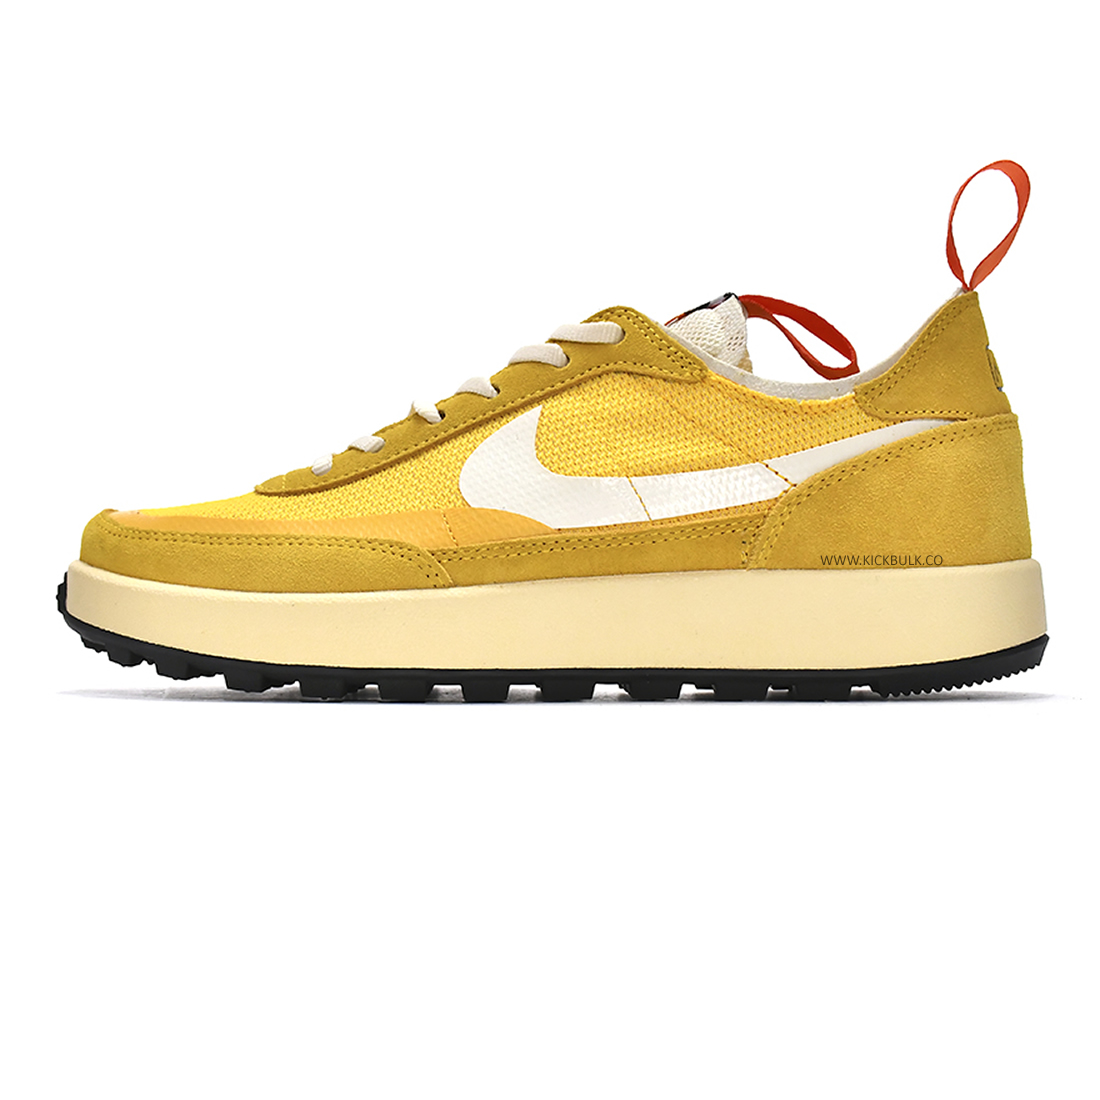 Tom Sachs Nikecraft General Purpose Shoe Yellow Wmns Da6672 700 1 - www.kickbulk.cc